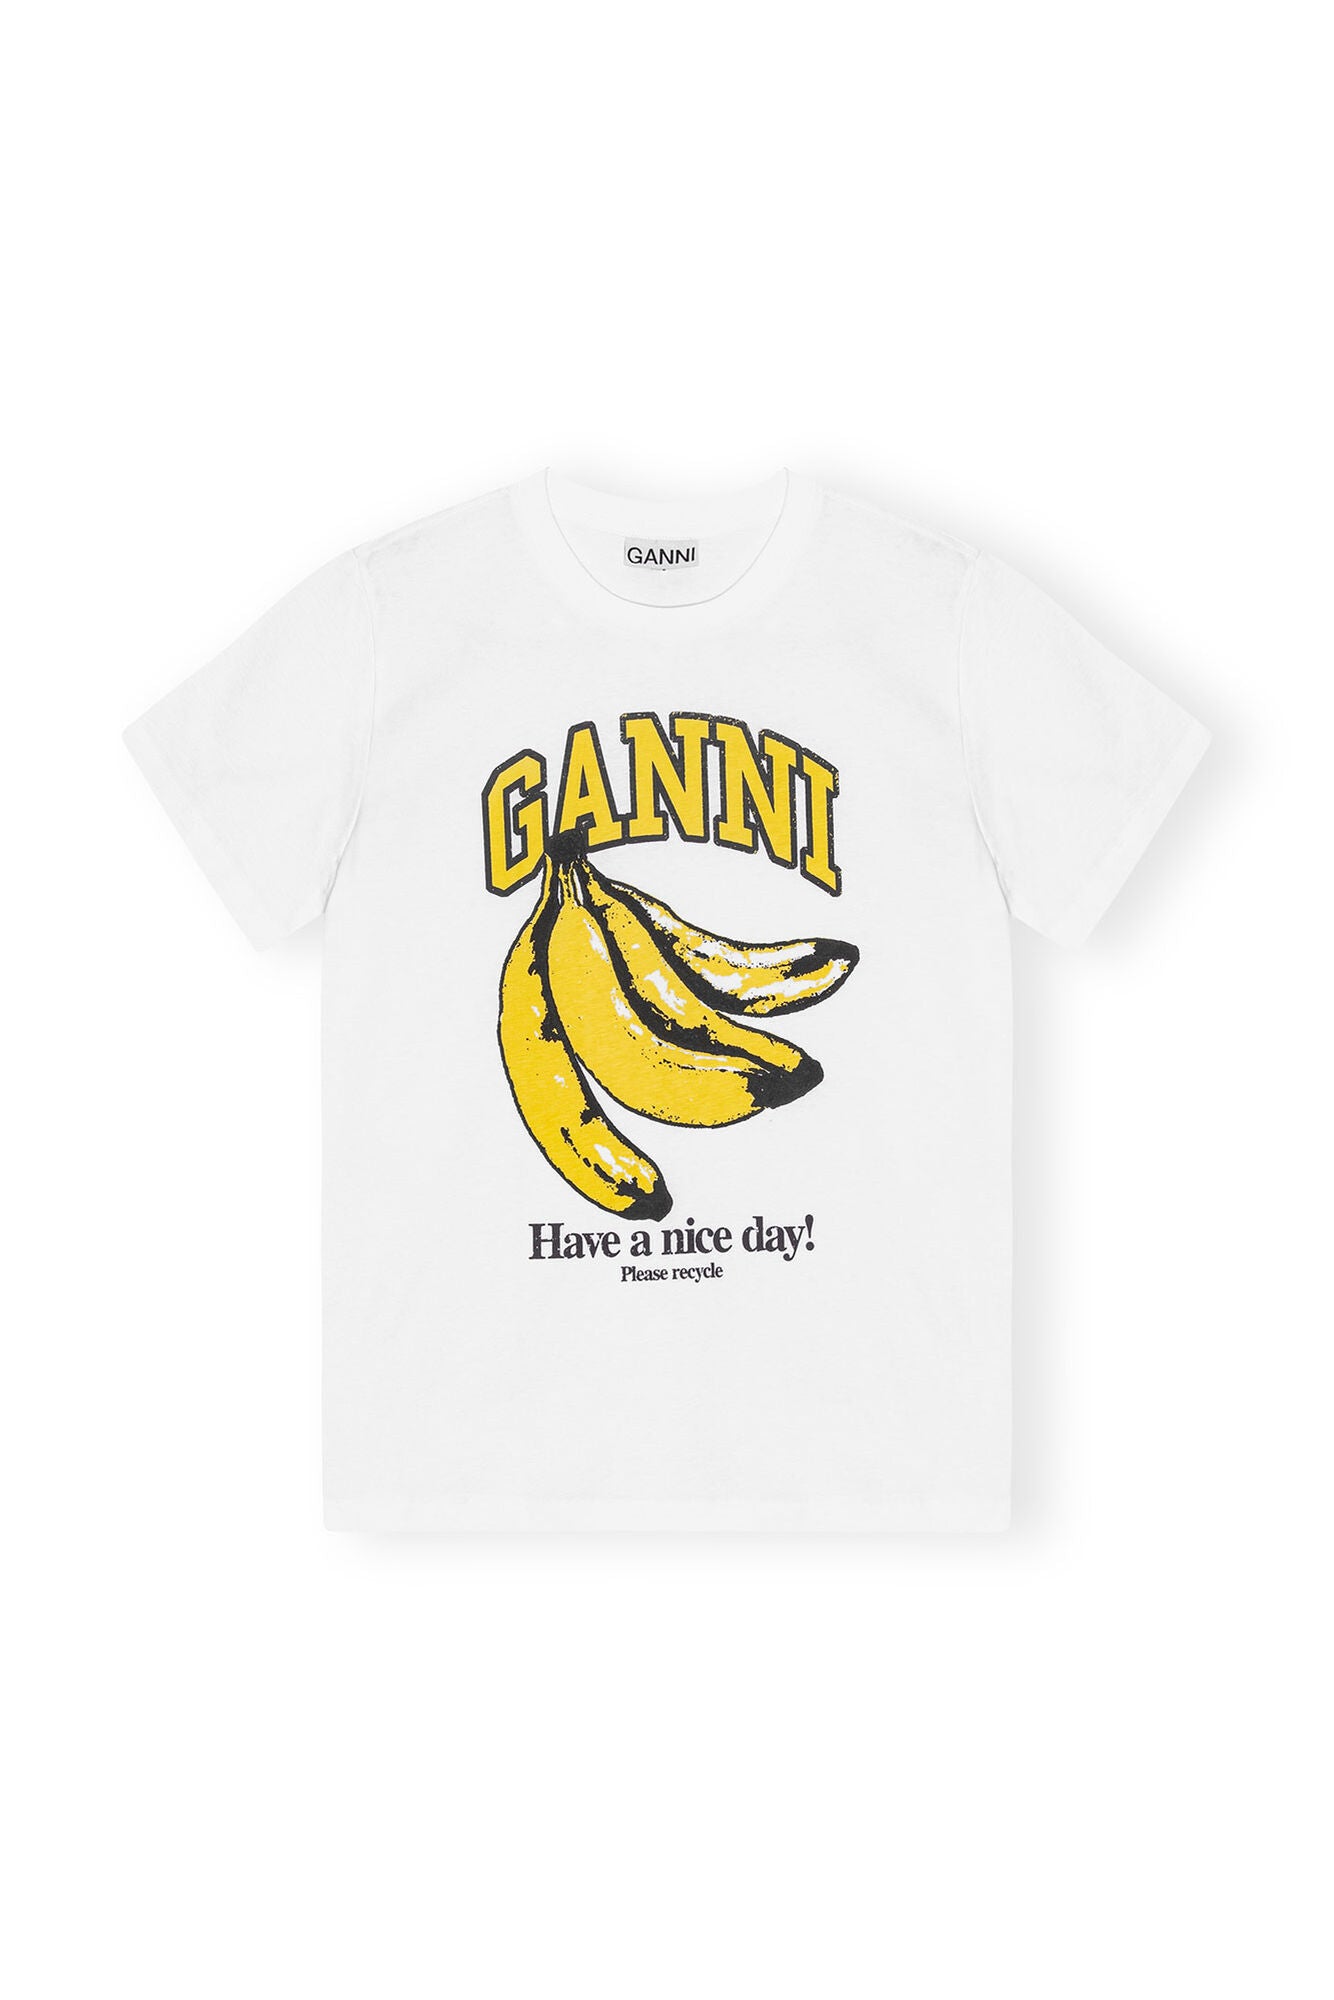 Basic Jersey Banana Relaxed T-Shirt - Bright White - GANNI - Danali - T3861